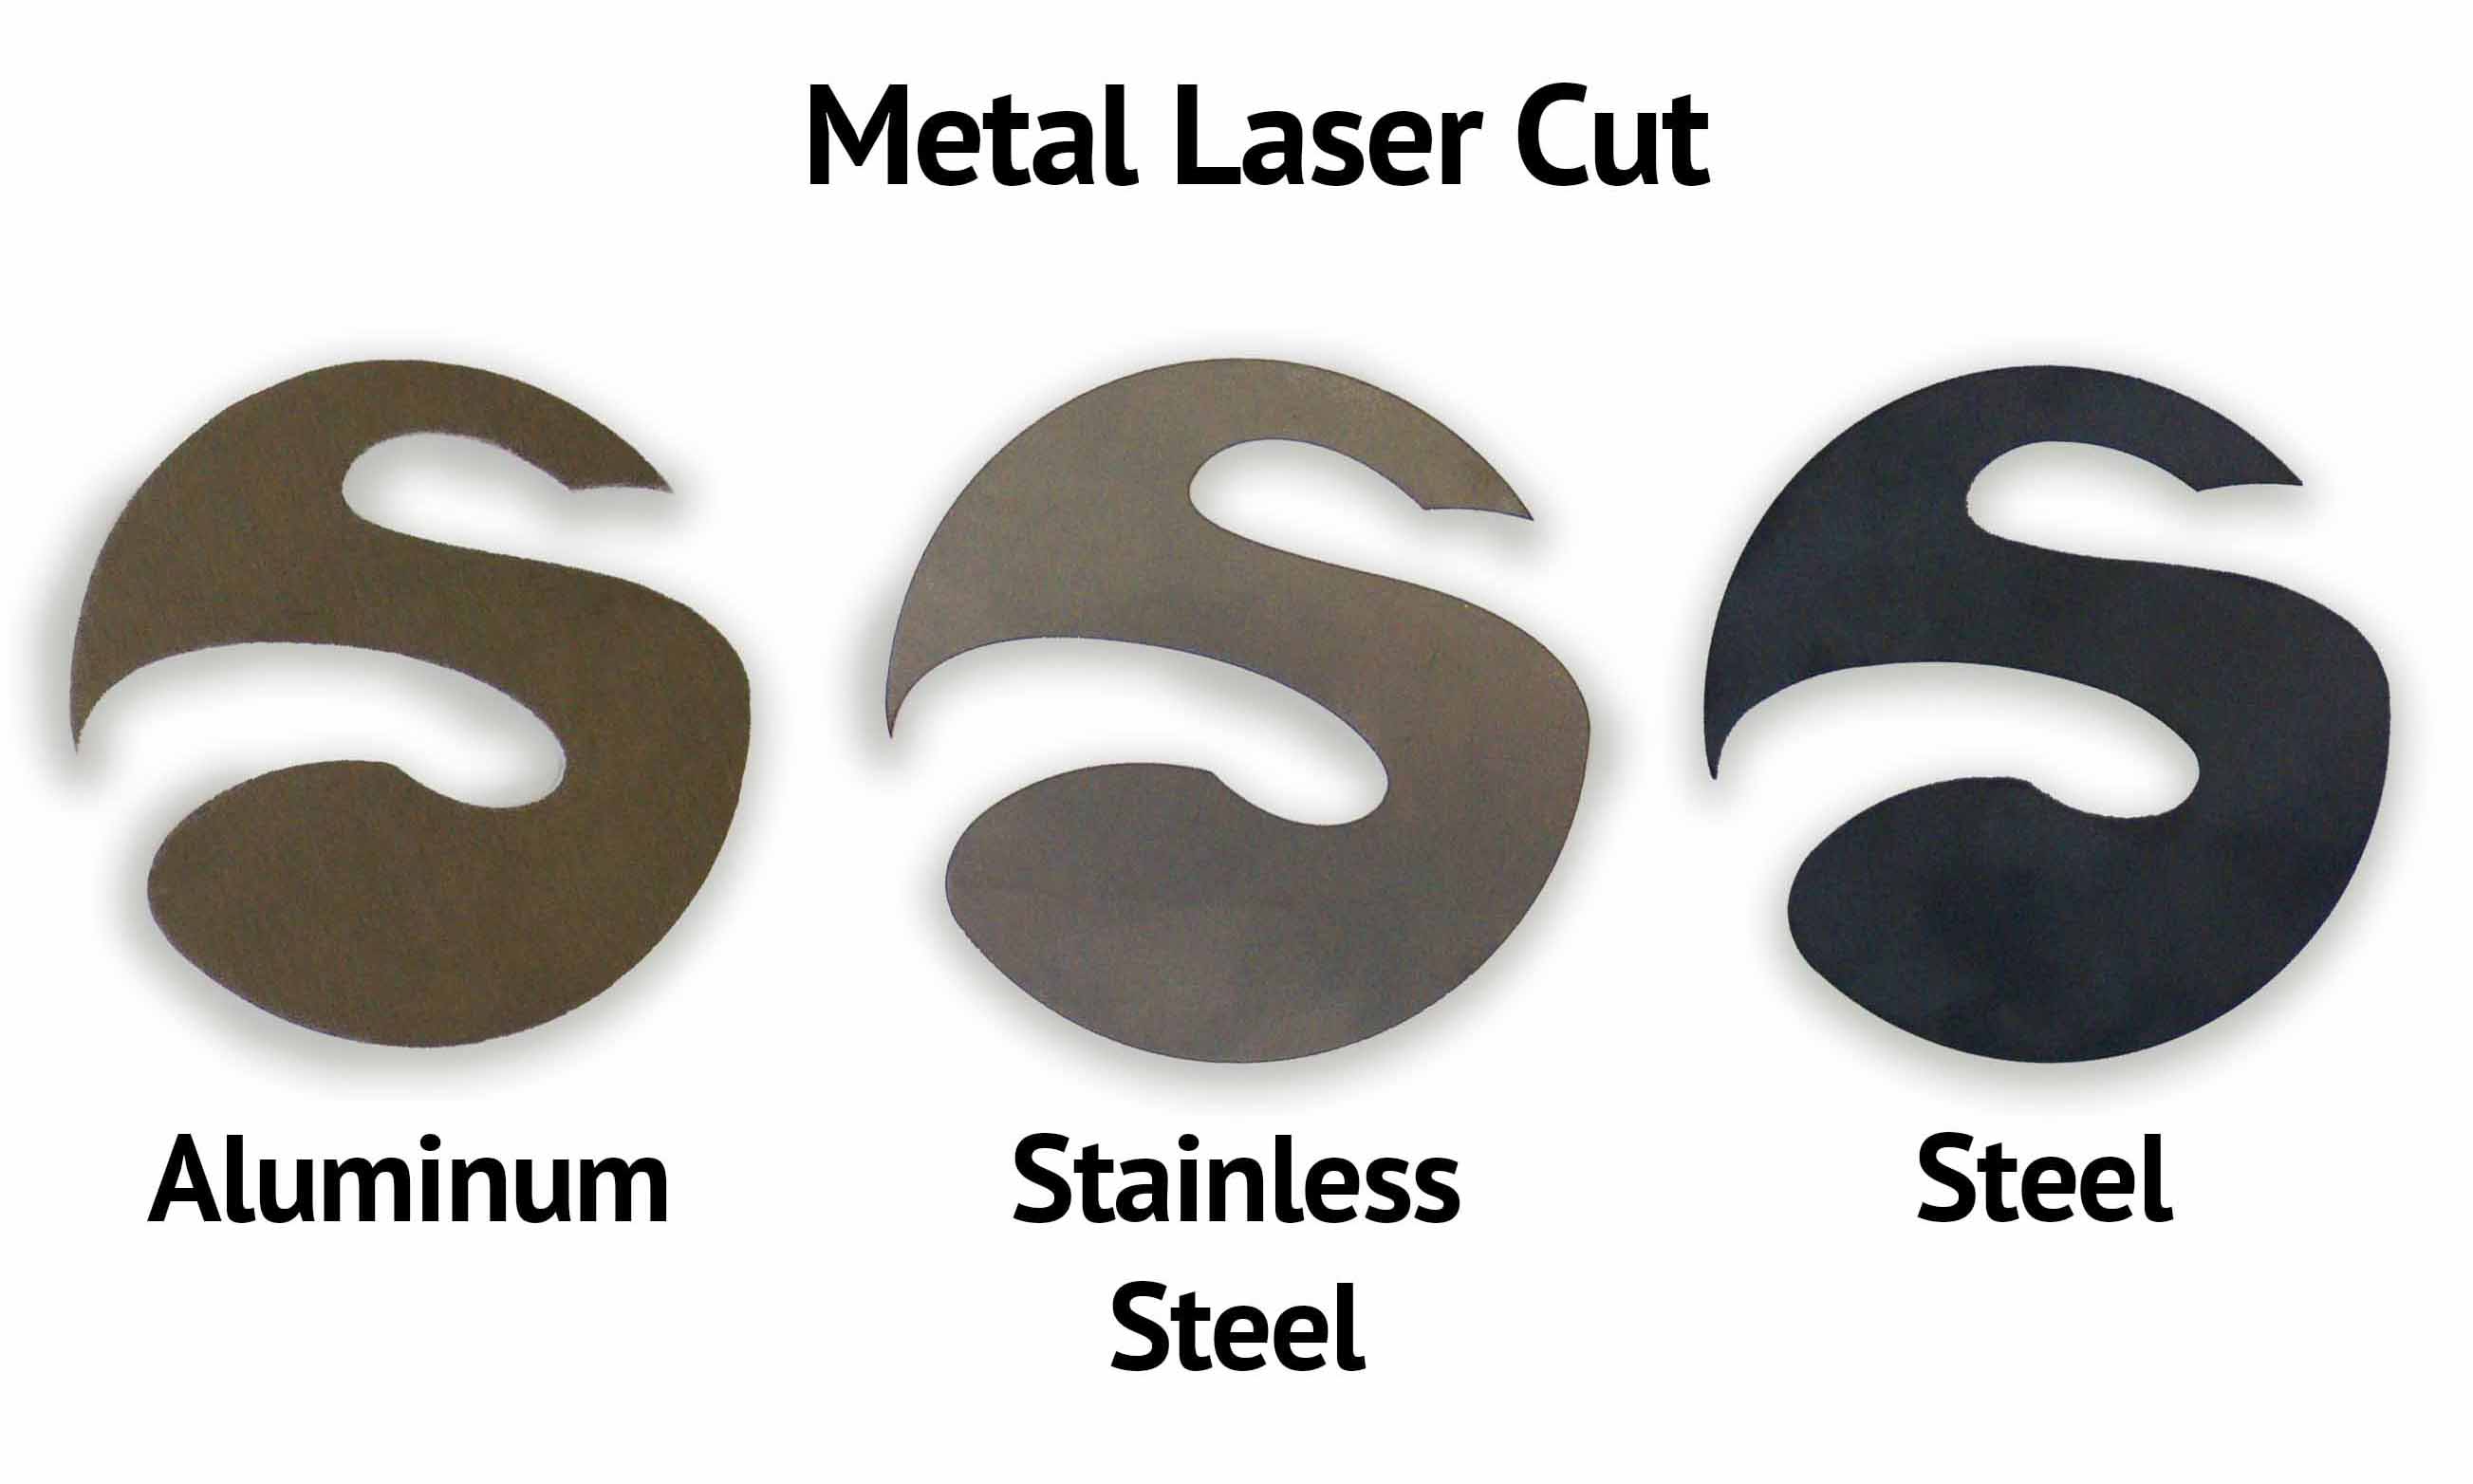 Sculpteo’s Laser Cut Metal Service